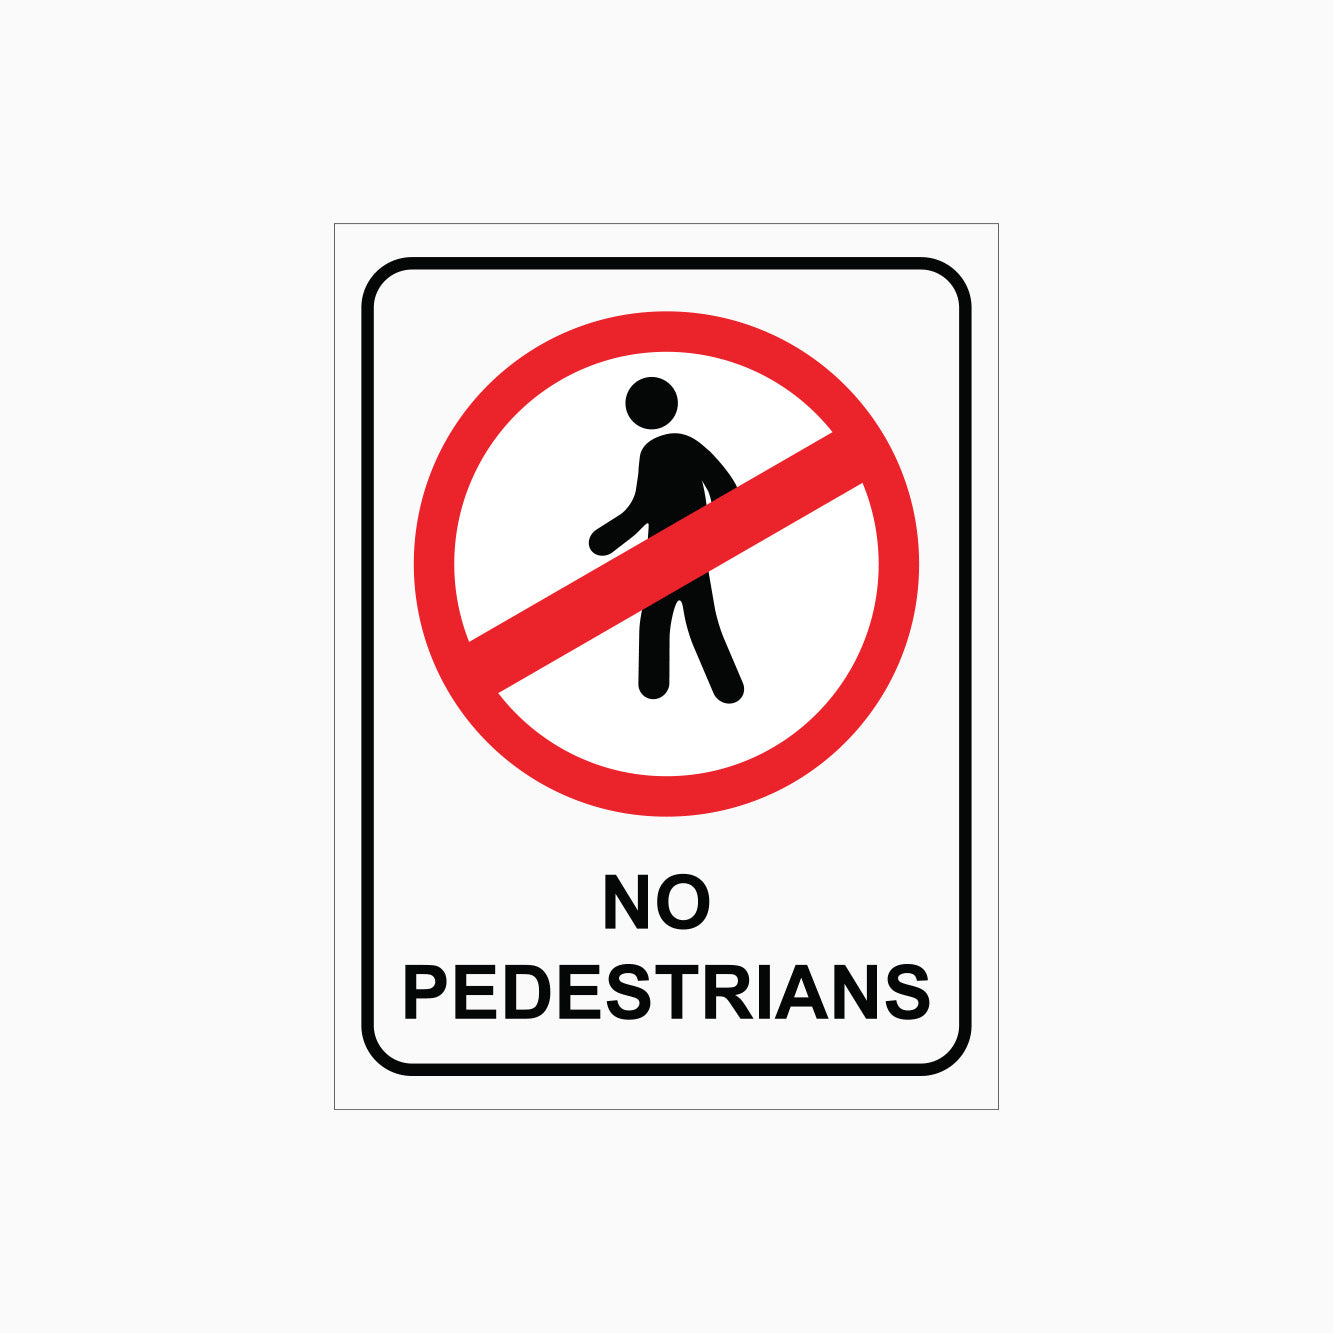 NO PEDESTRIANS SIGN